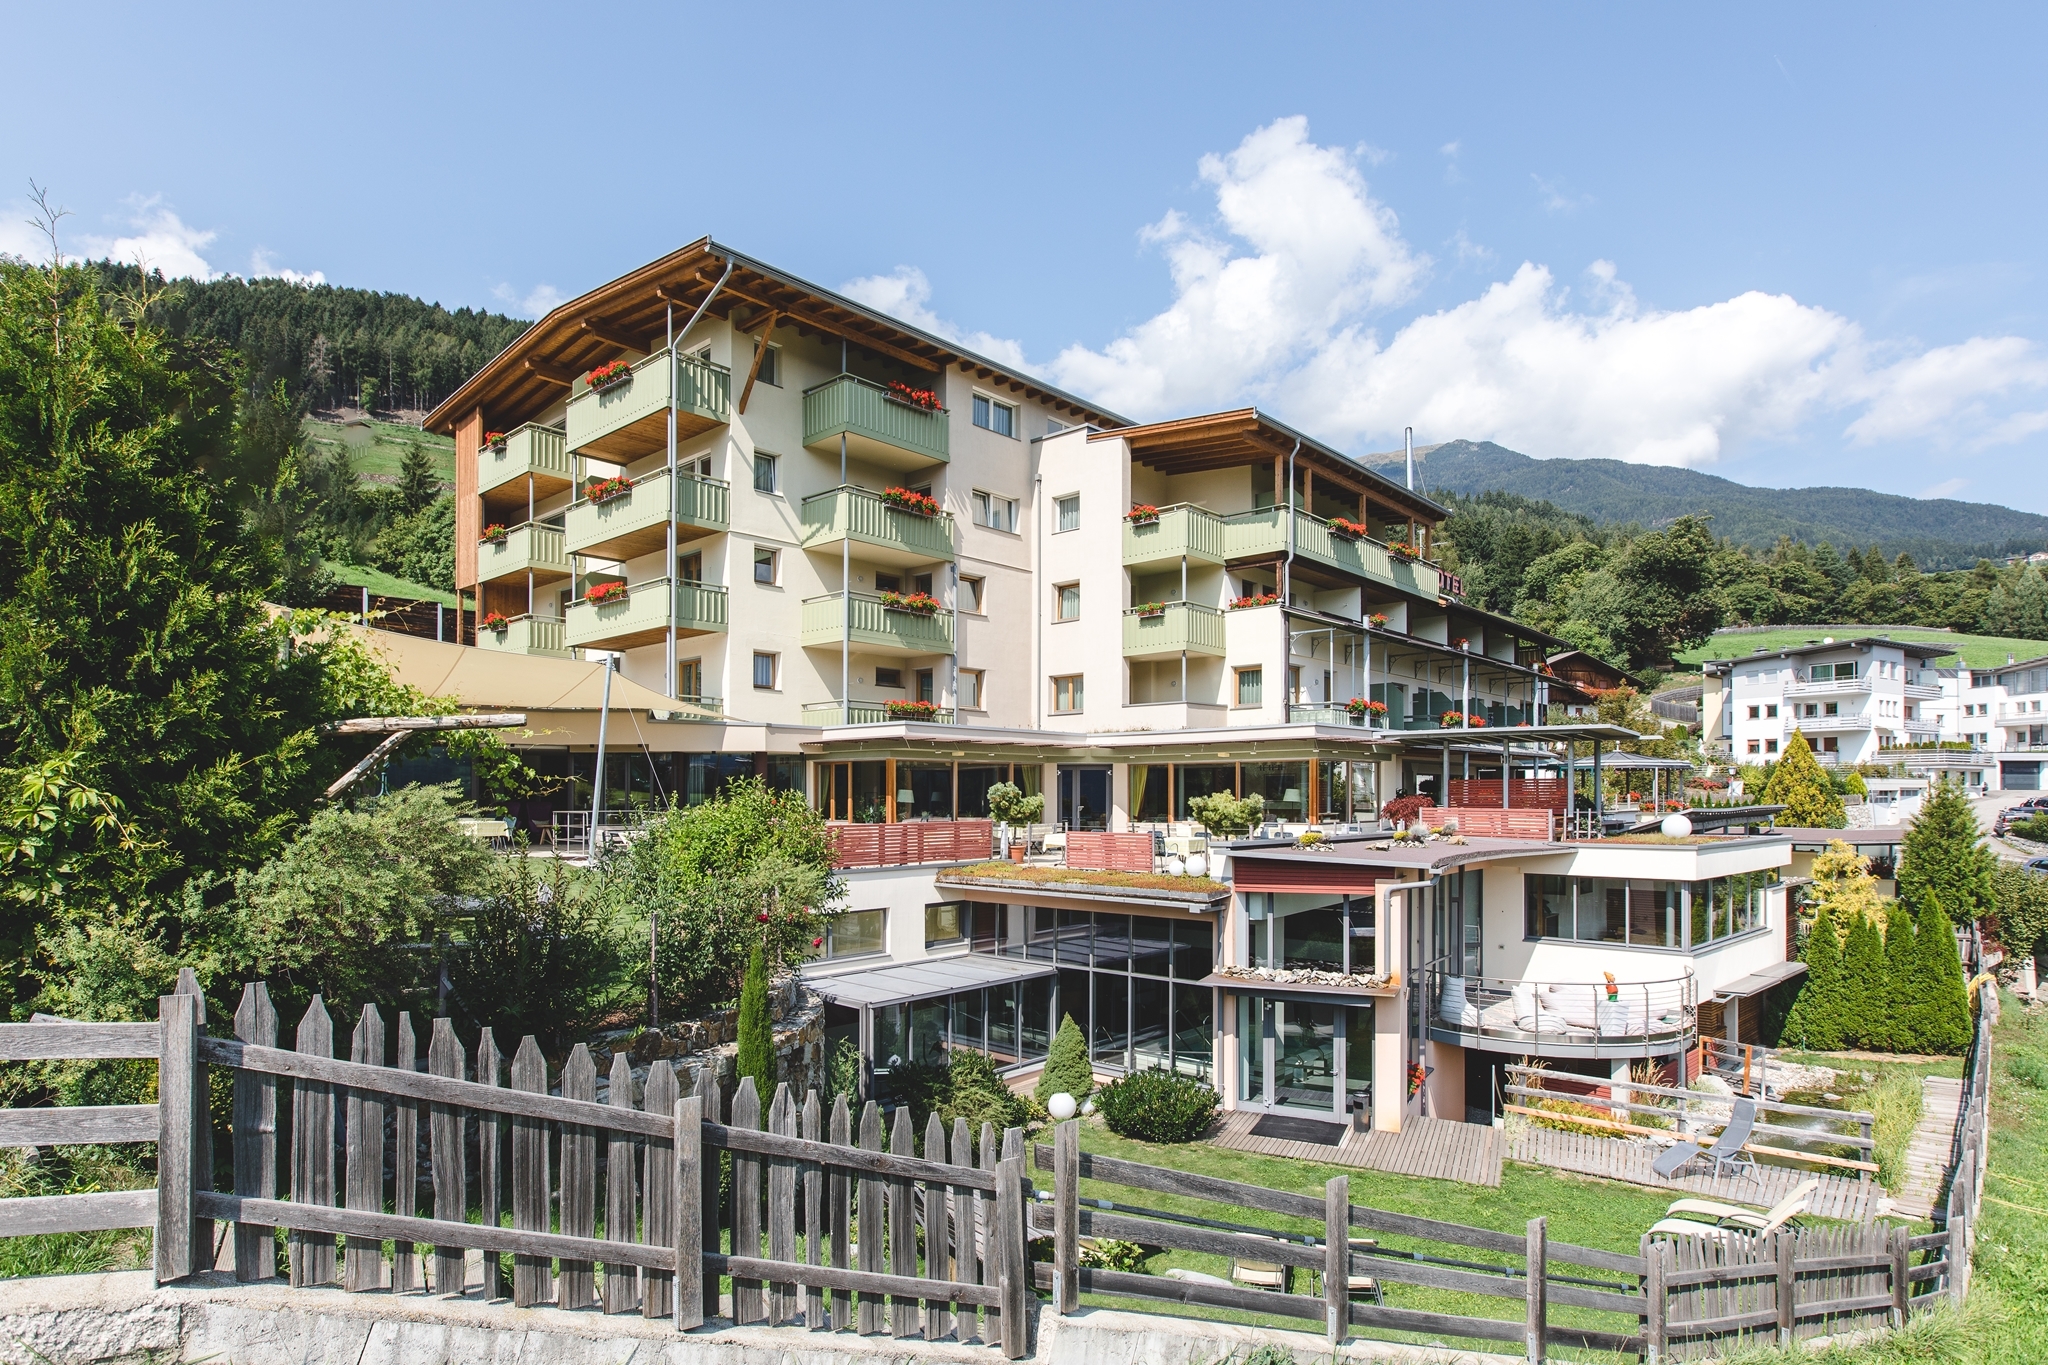 Vinumhotel Feldthurnerhof - Panorama-Wellness - Velturno in Valle Isarco